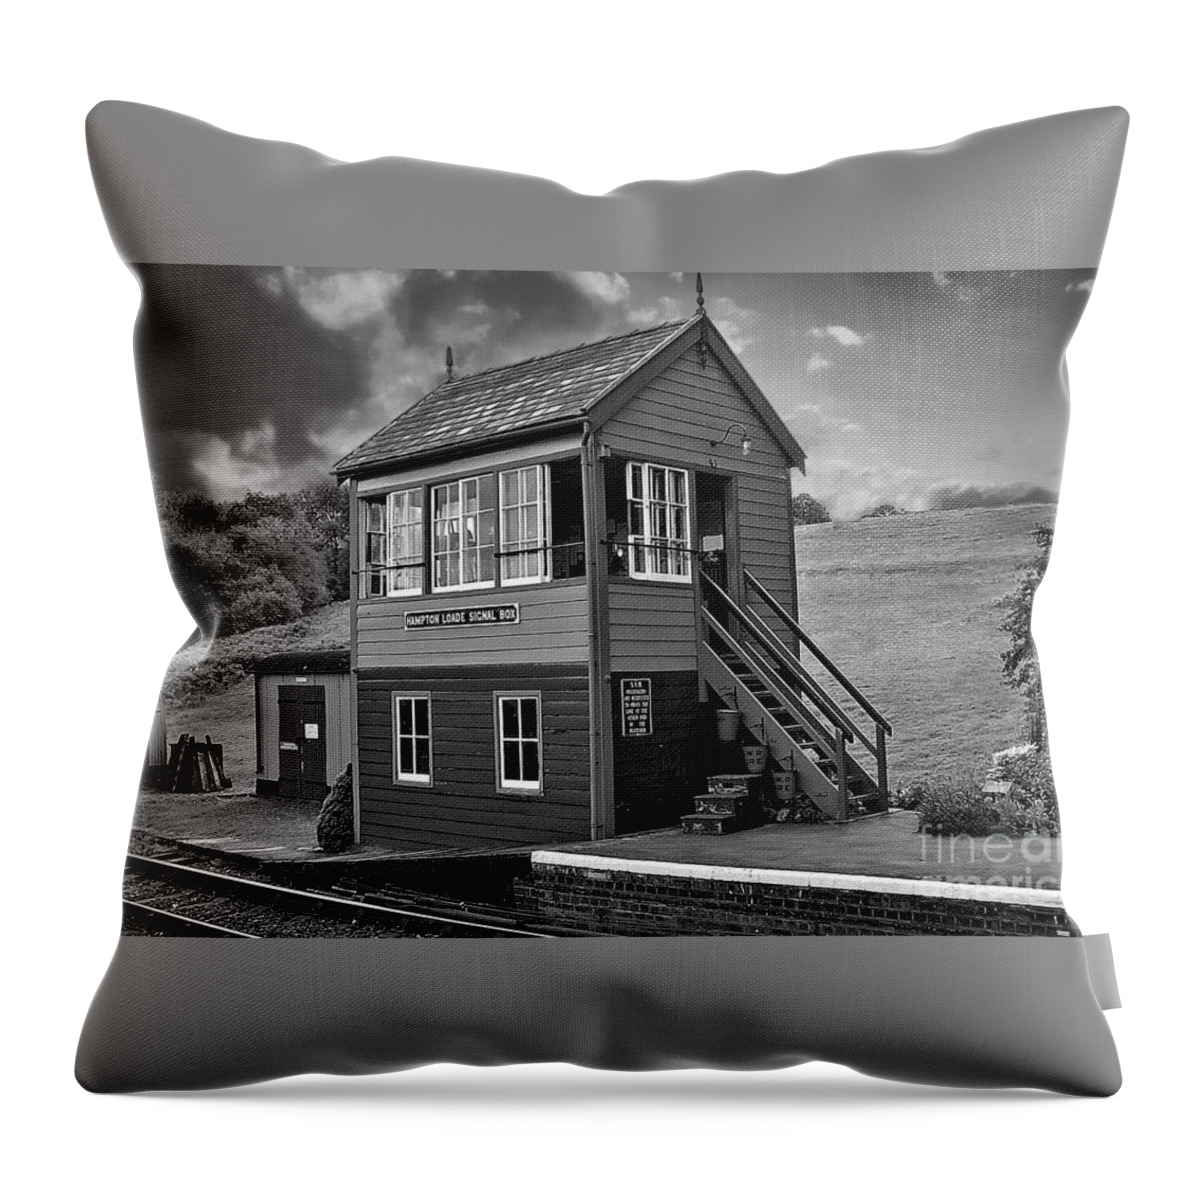 Railways Throw Pillow featuring the photograph Hampton Loade Signal Box by Richard Denyer